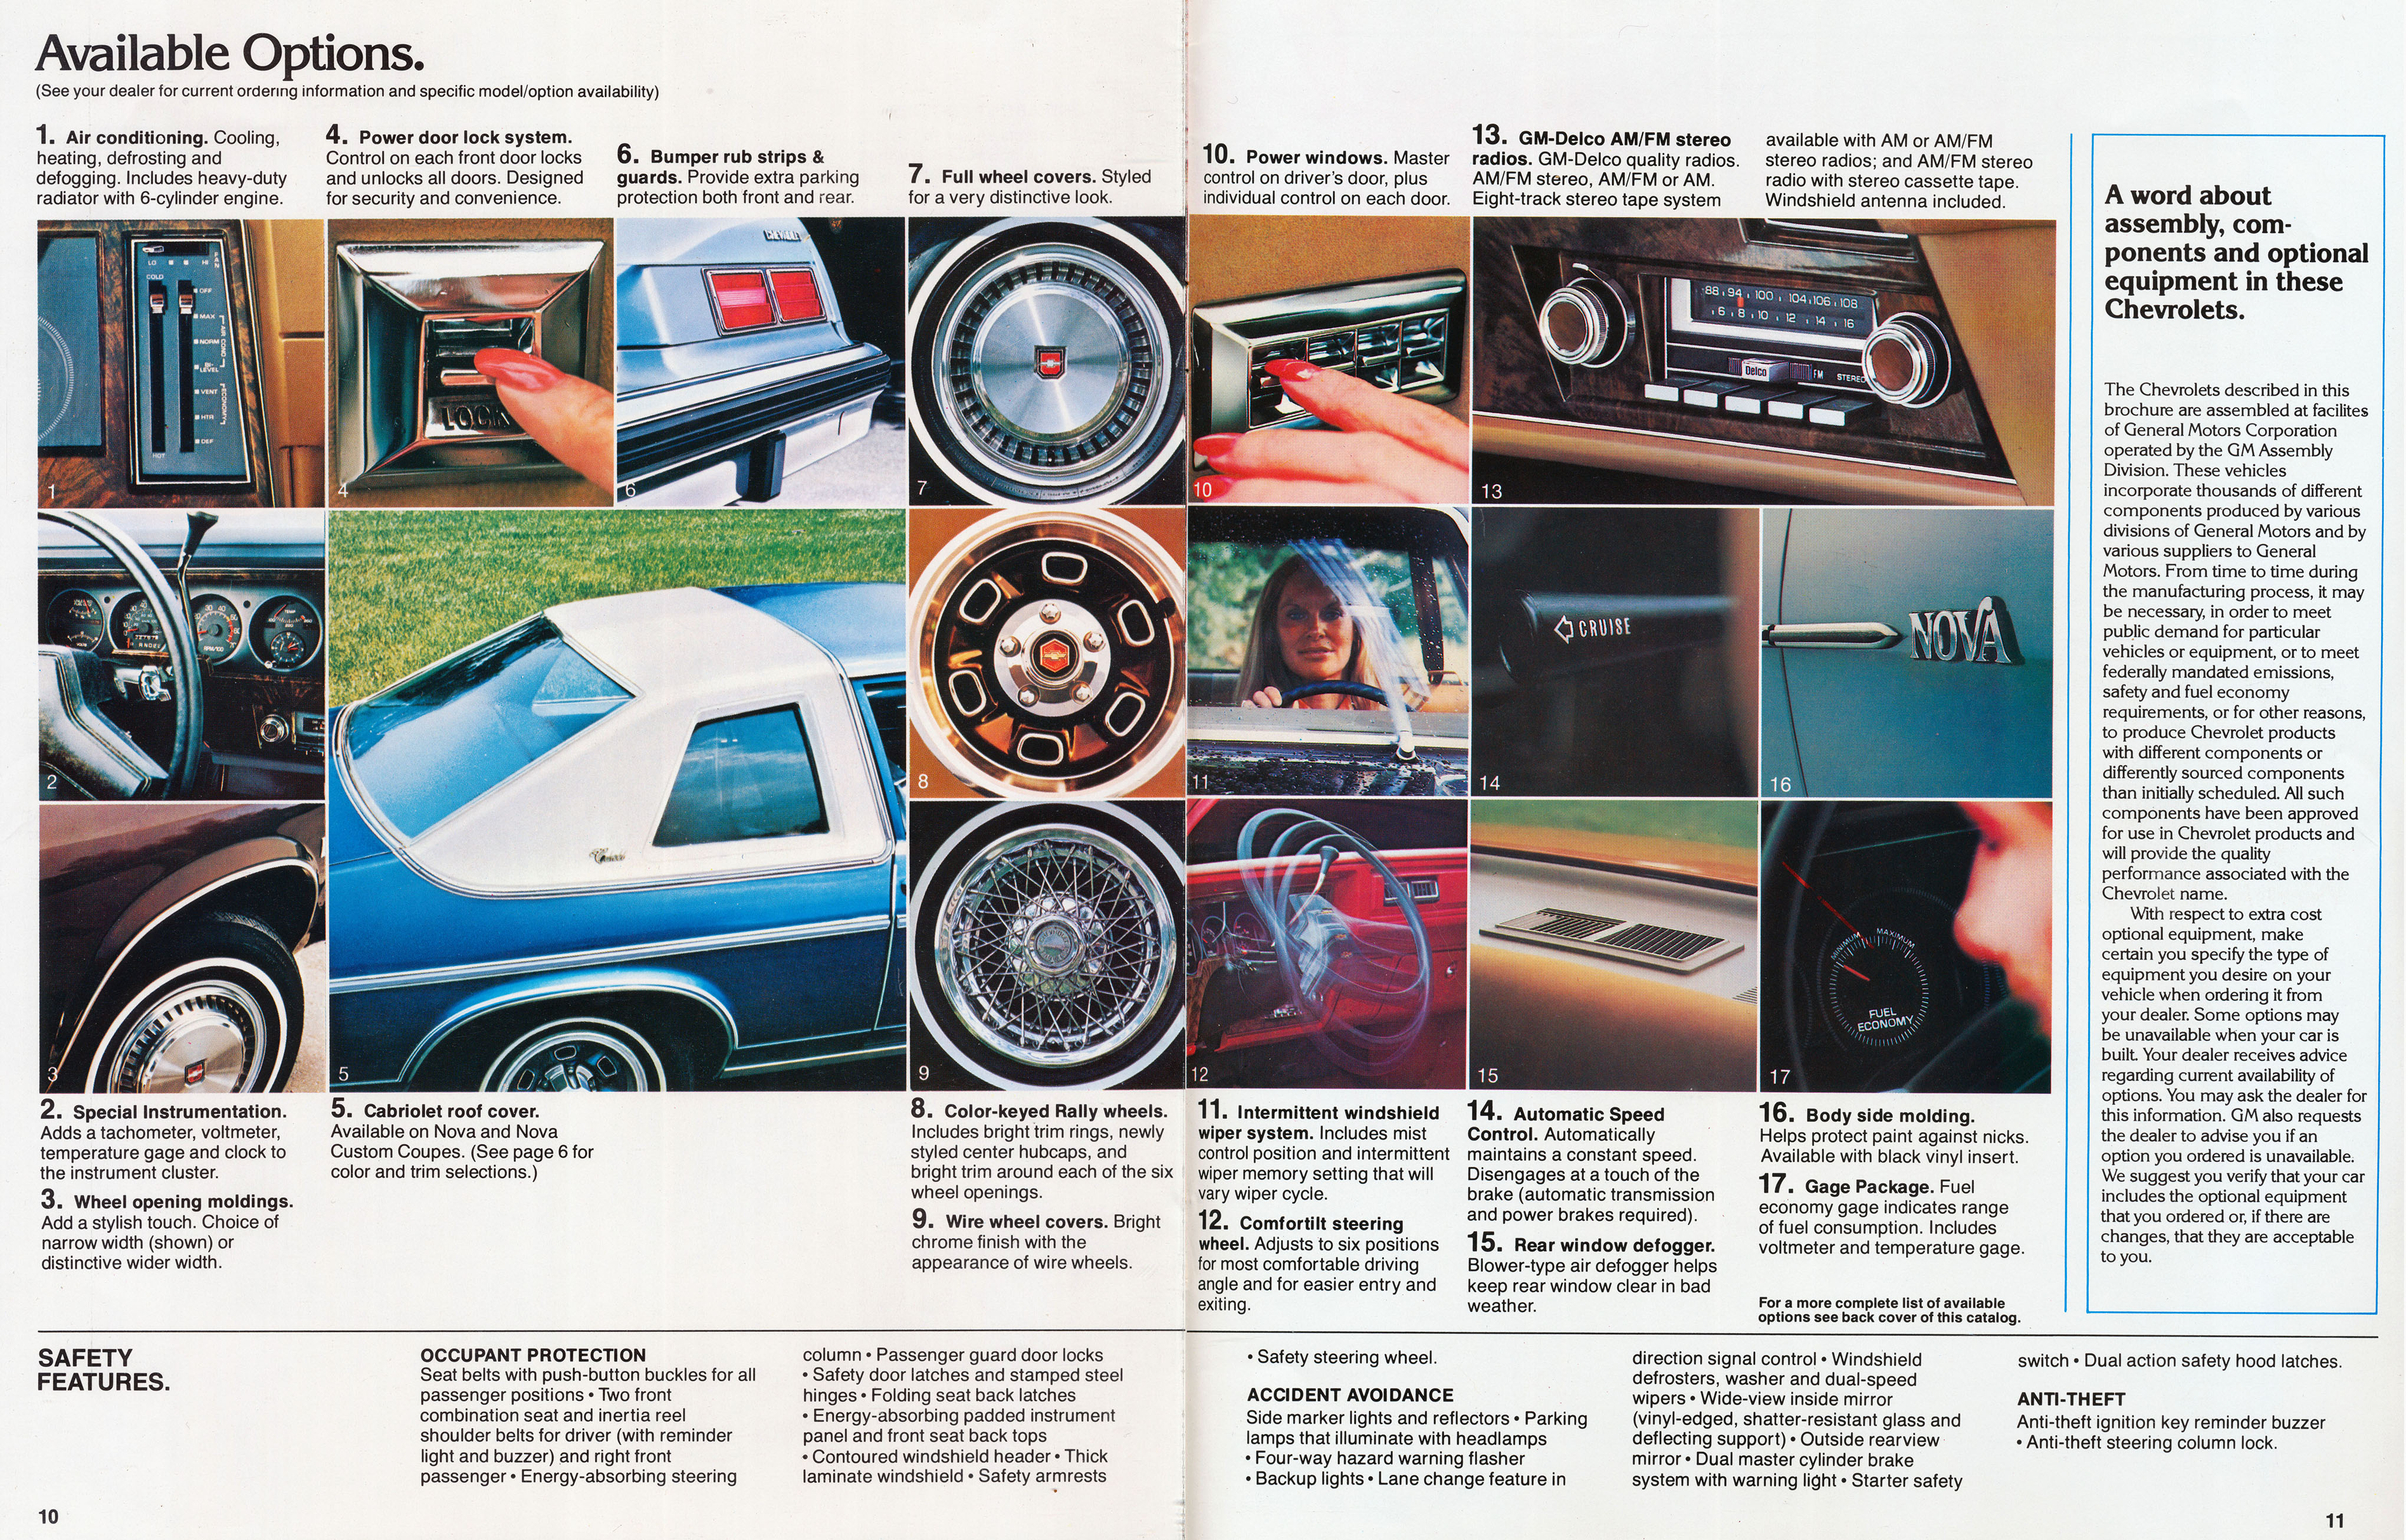 10-11 - 1979 Chevrolet Nova Brochure